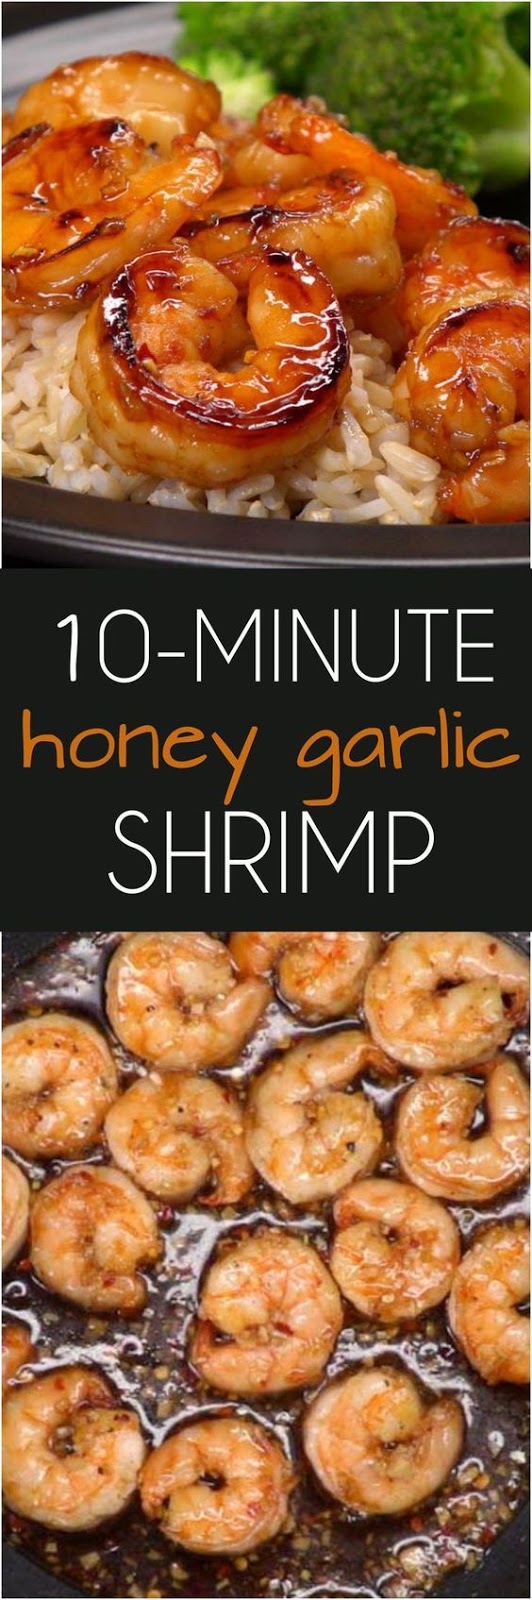 10-Minute Honey Garlic Shrimp